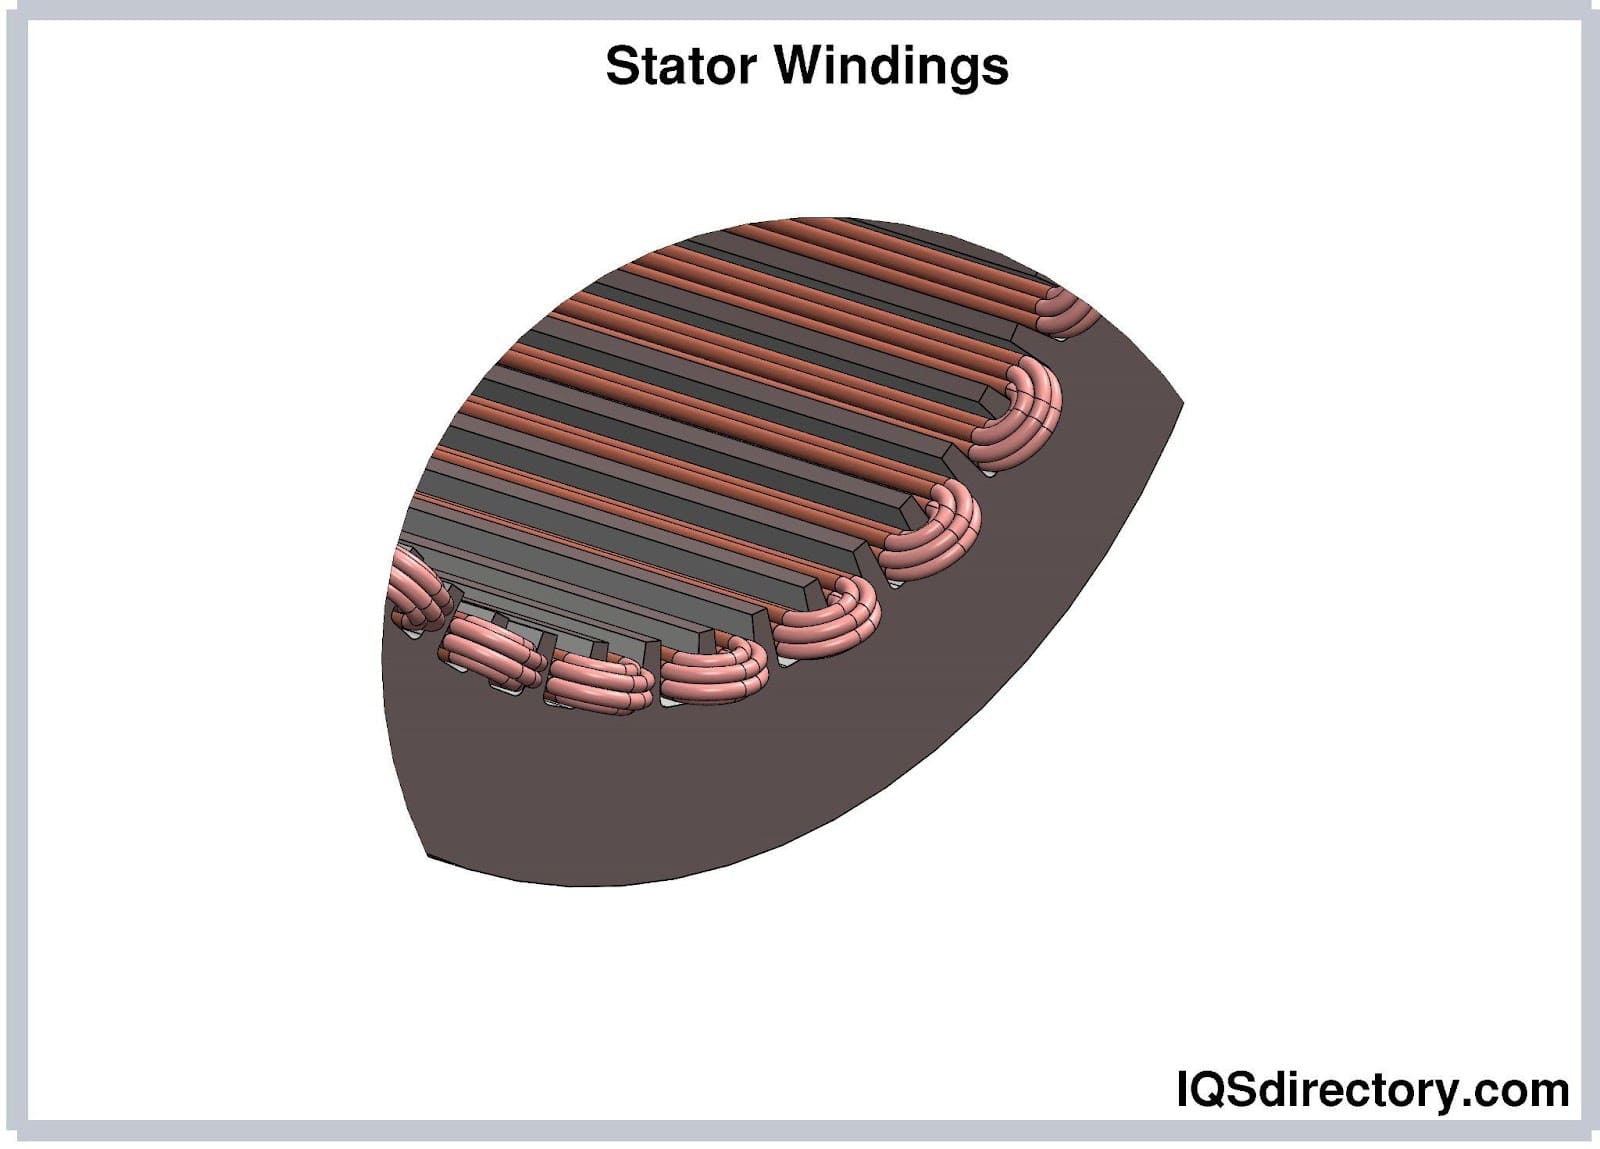 Stator Windings